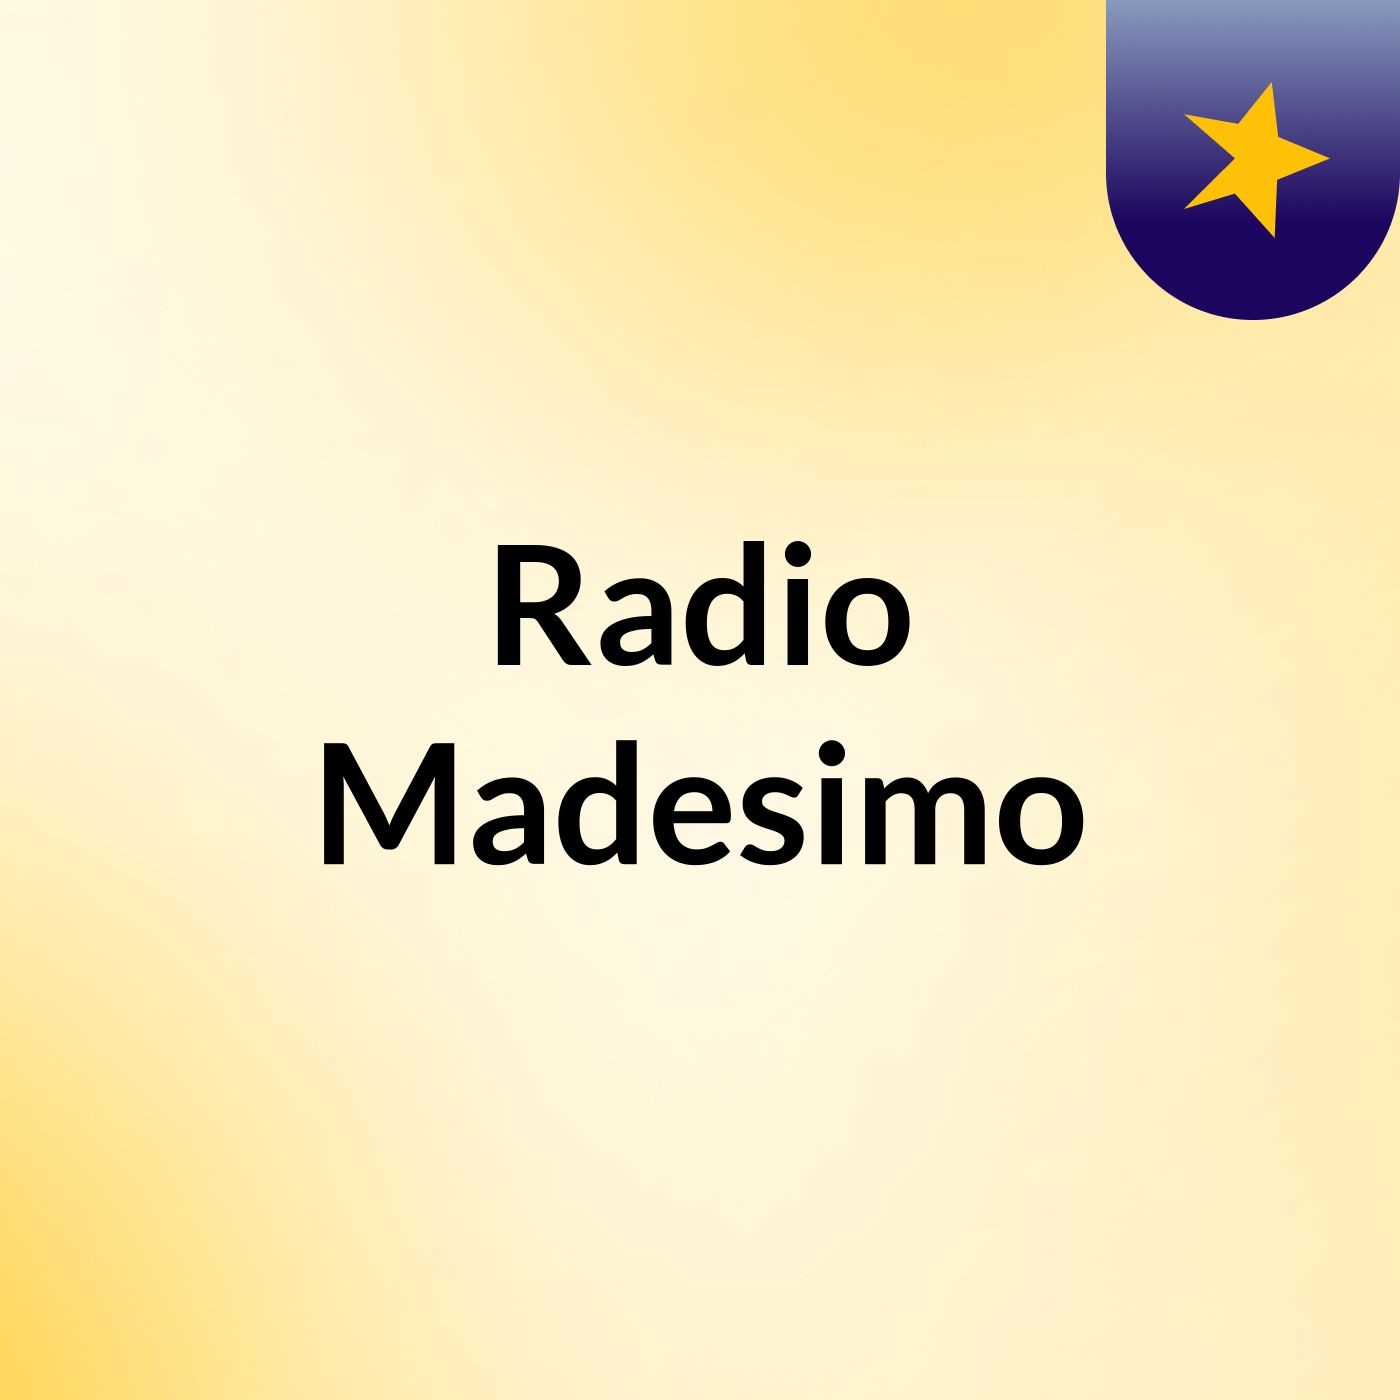 Radio Madesimo